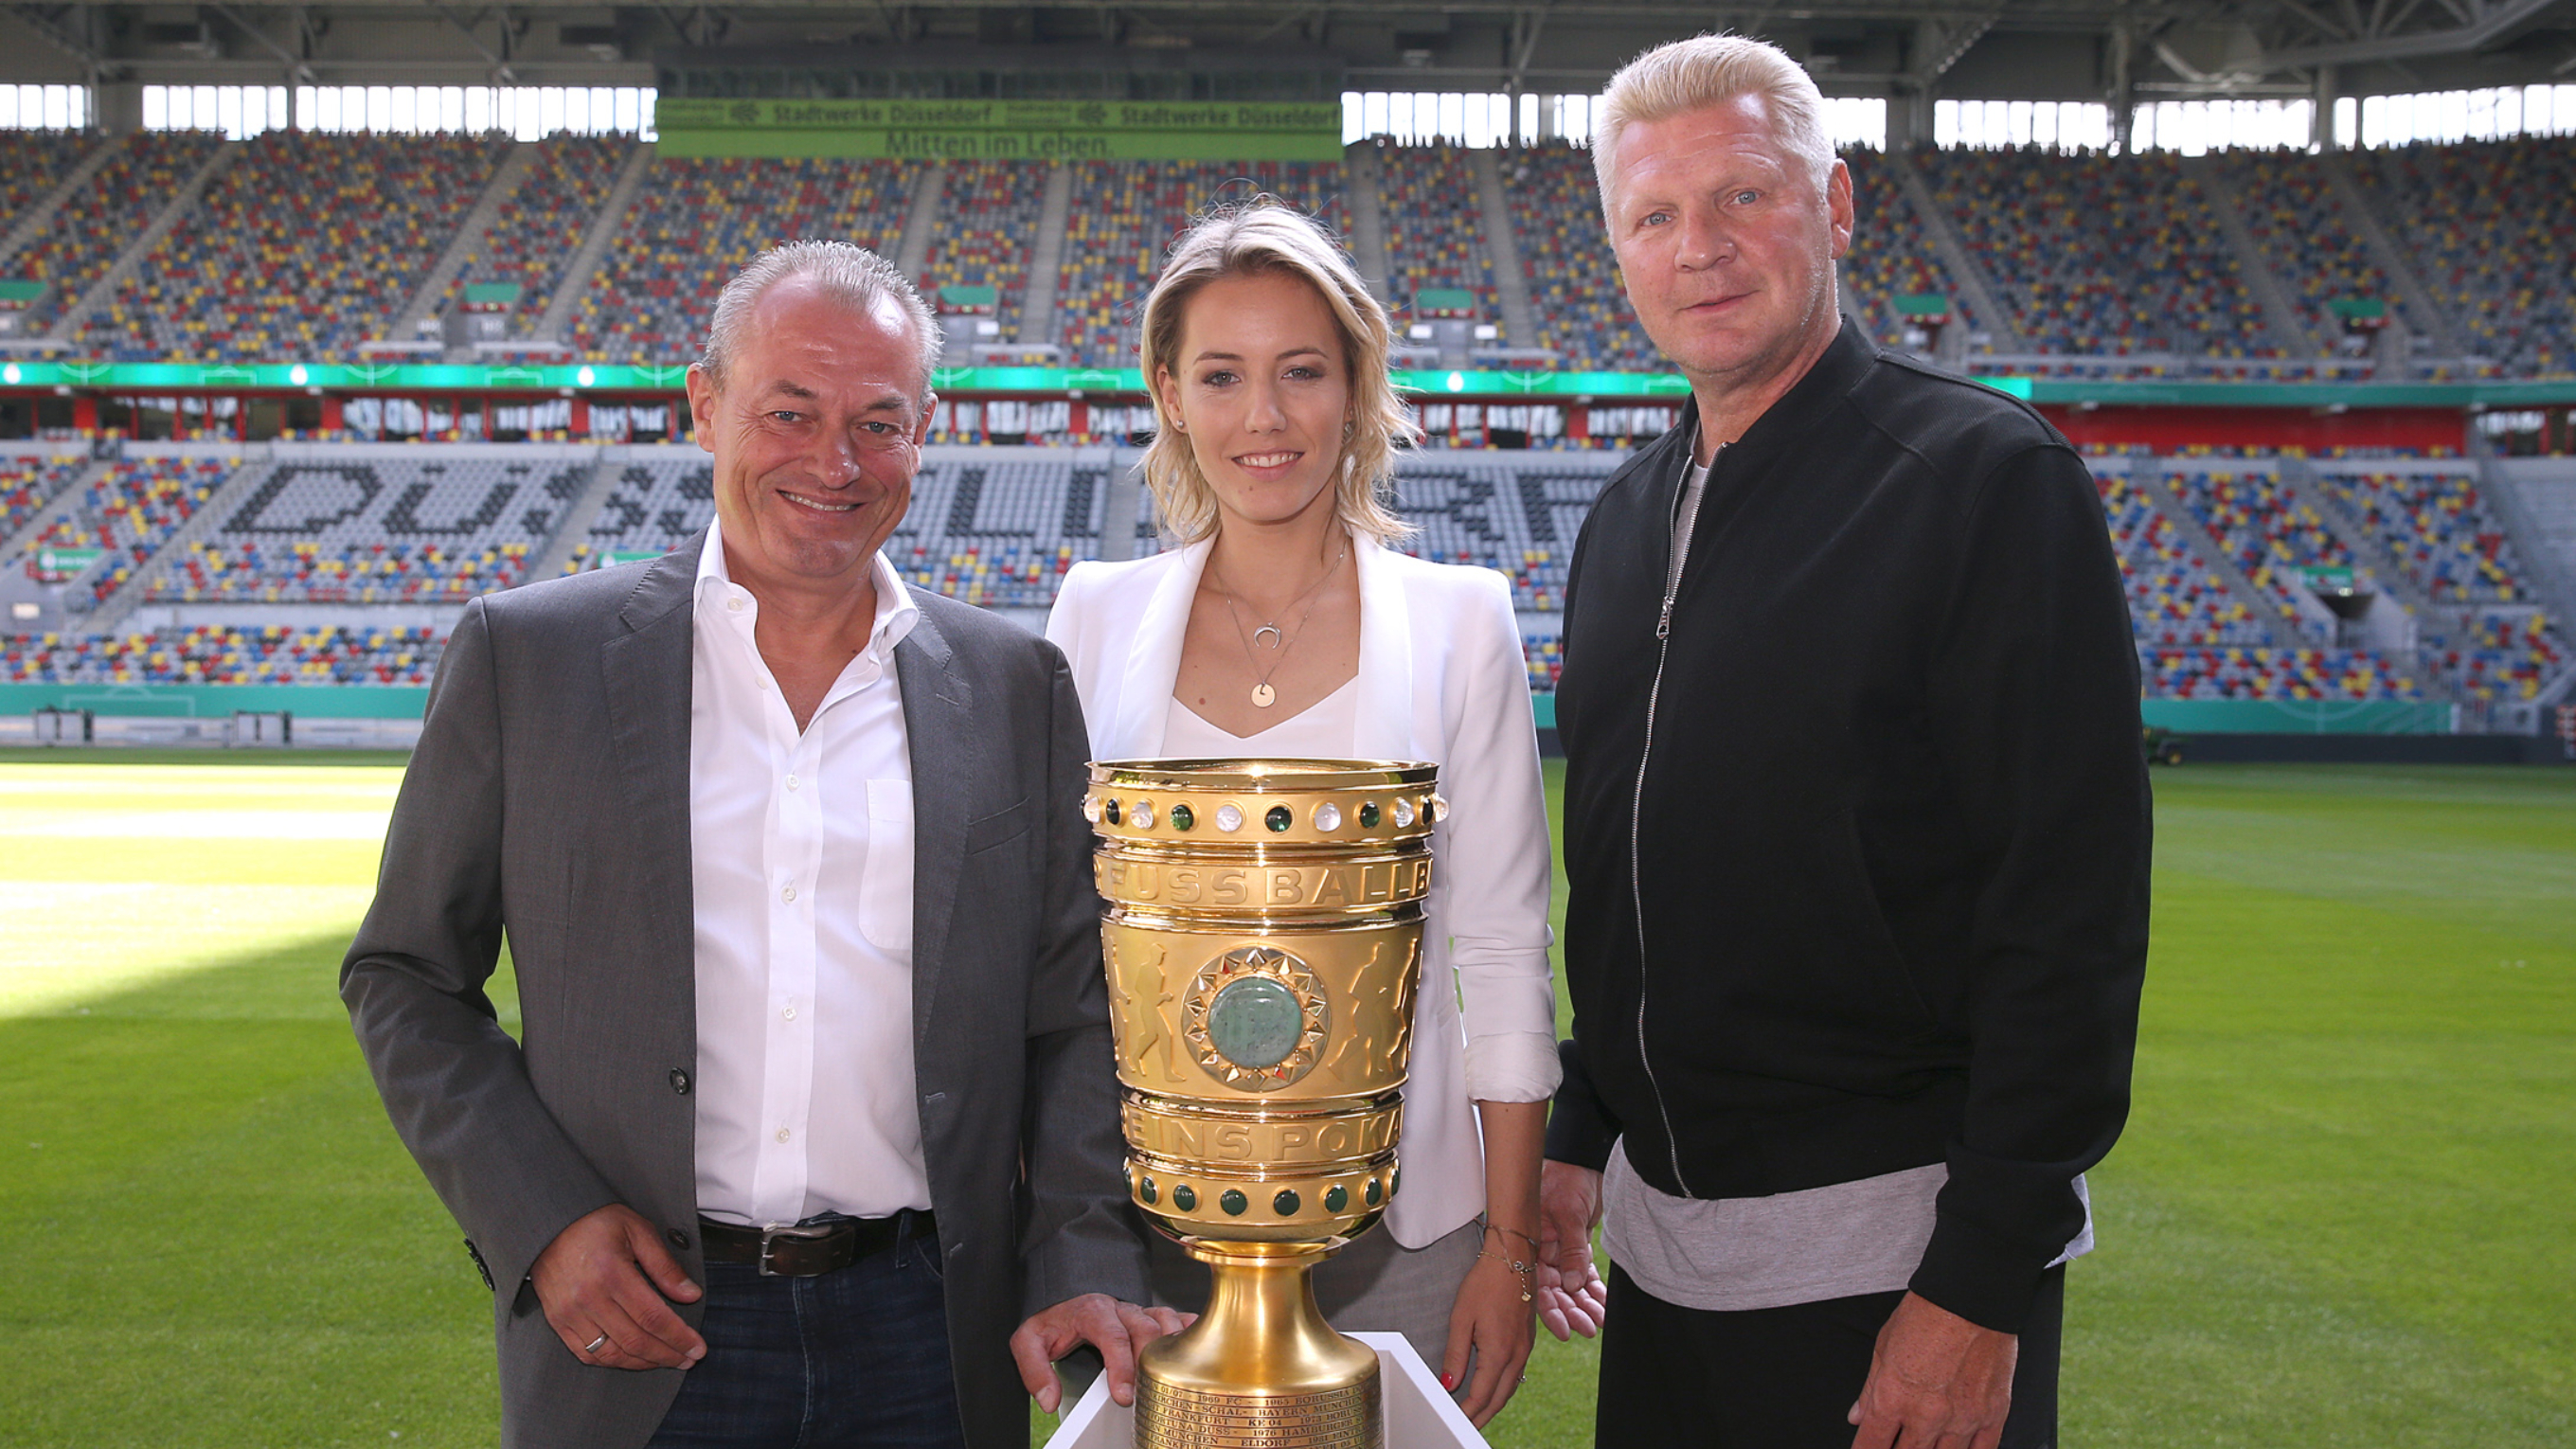 TV-Partner Sport1 TV-Partner DFB-Pokal der Männer DFB-Wettbewerbe Männer Ligen and Wettbewerbe DFB